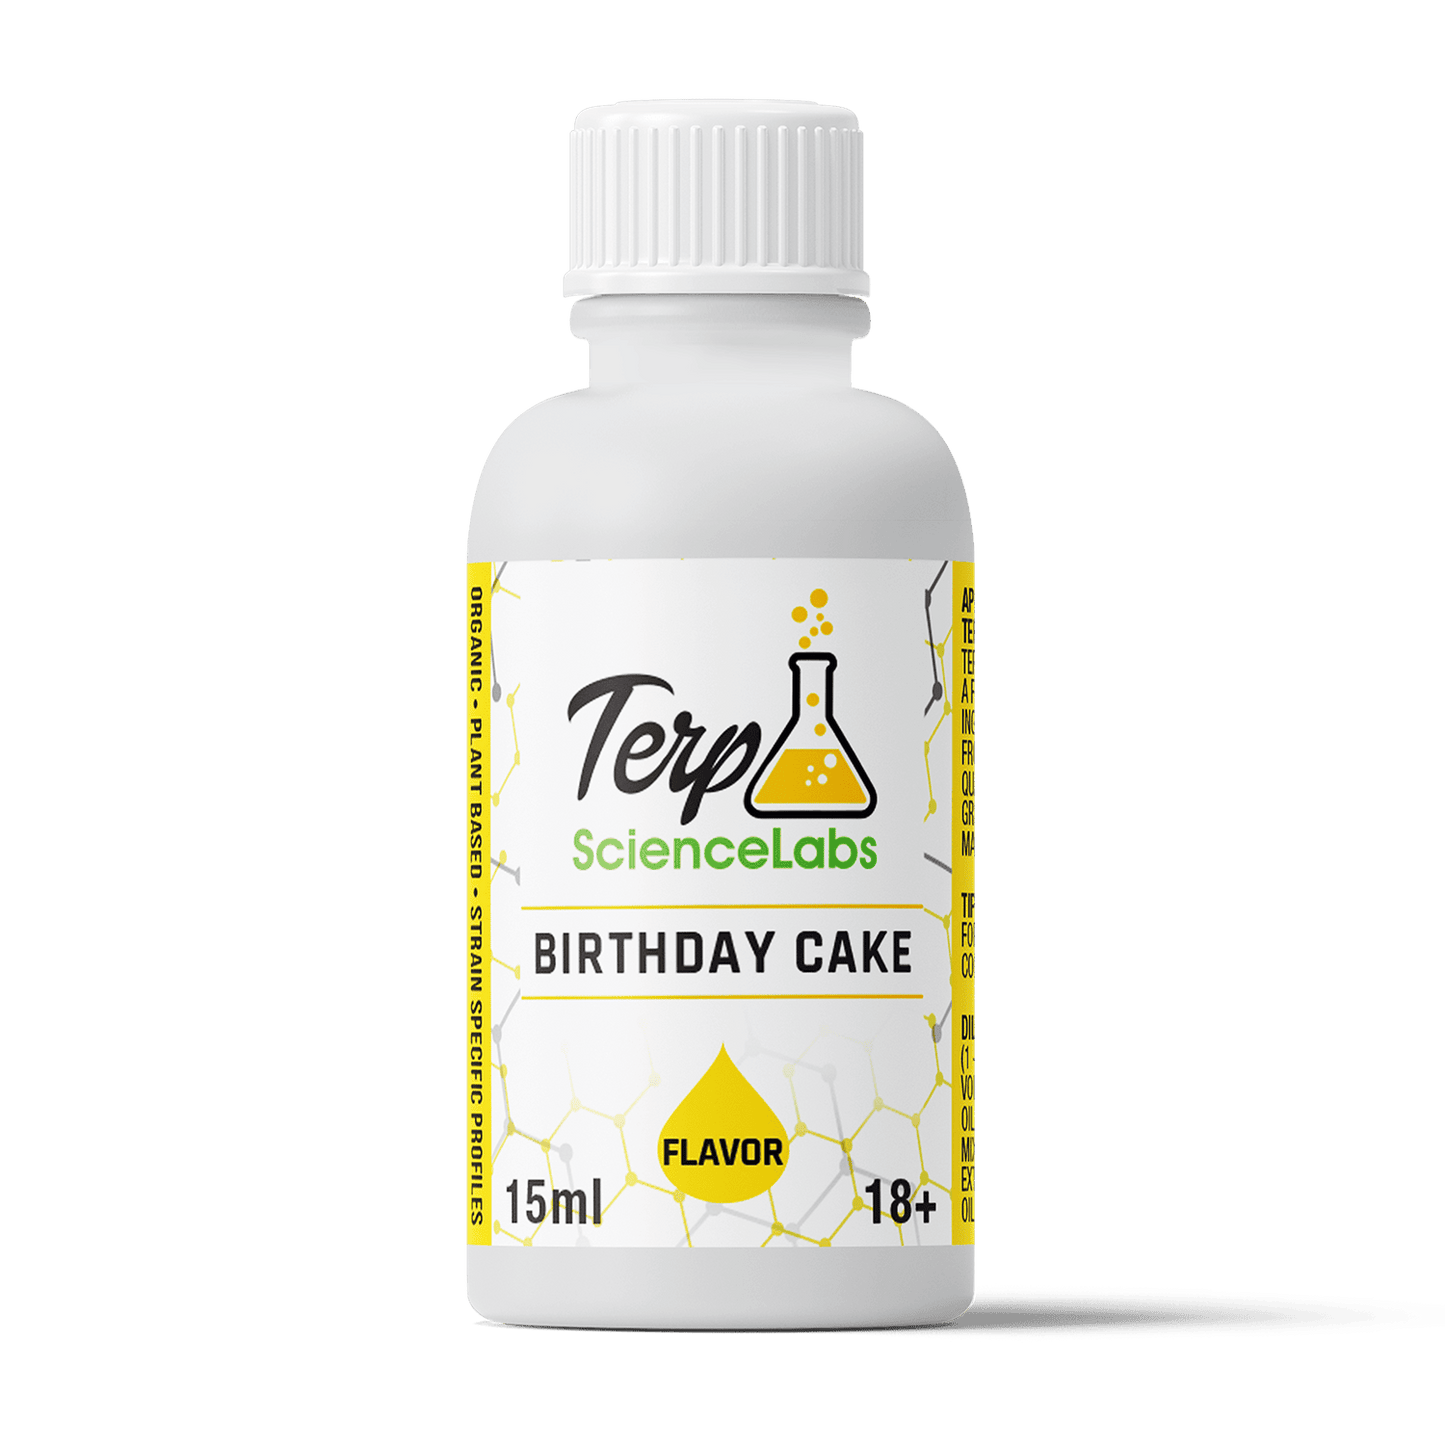 Birthday Cake Flavor Profile